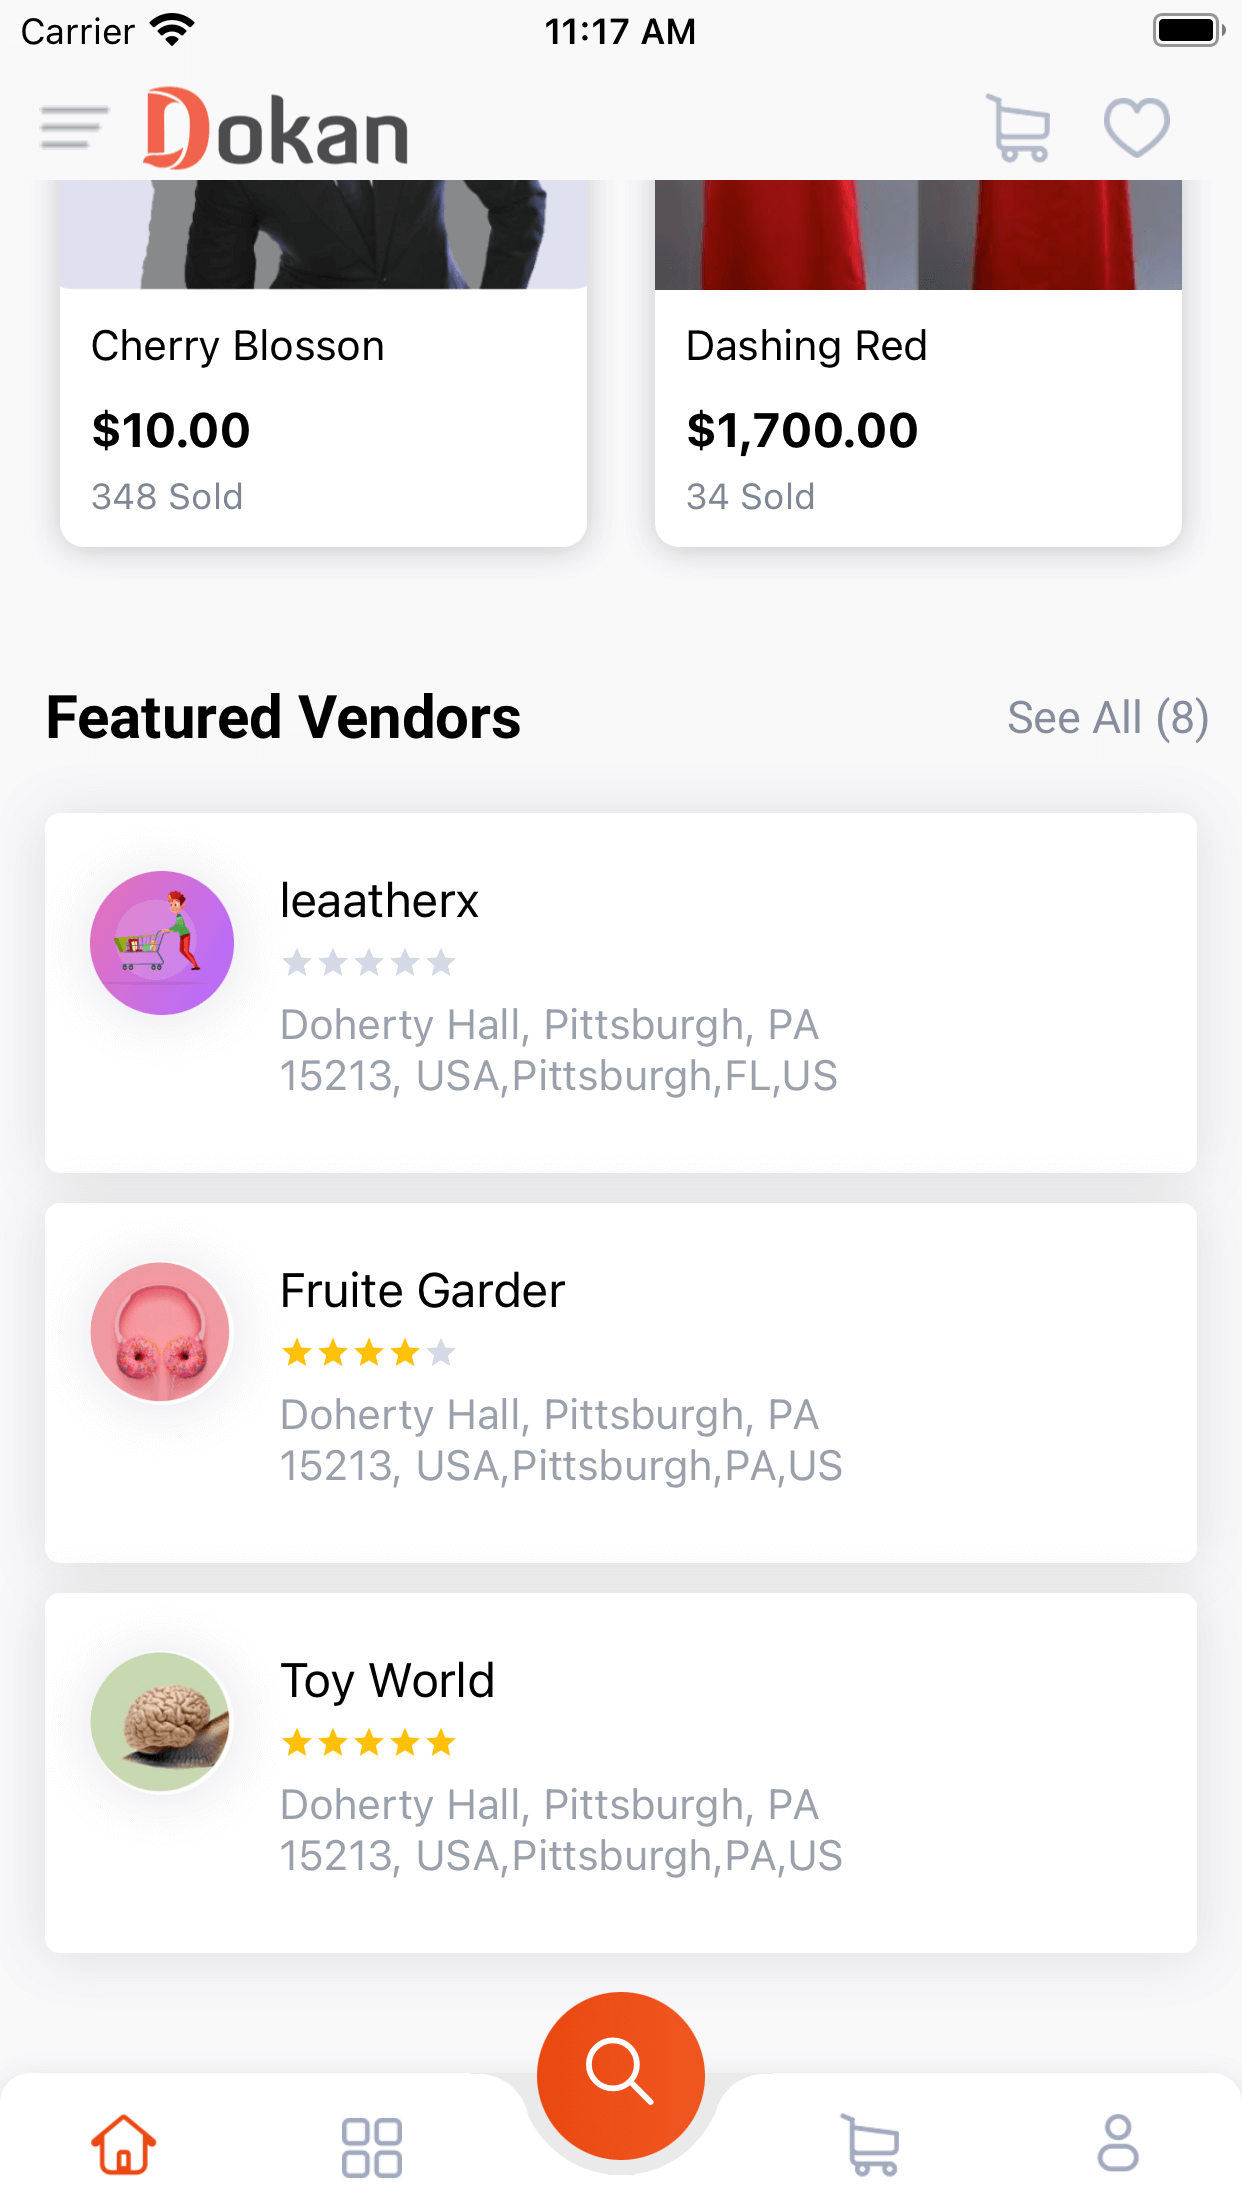 added vendors